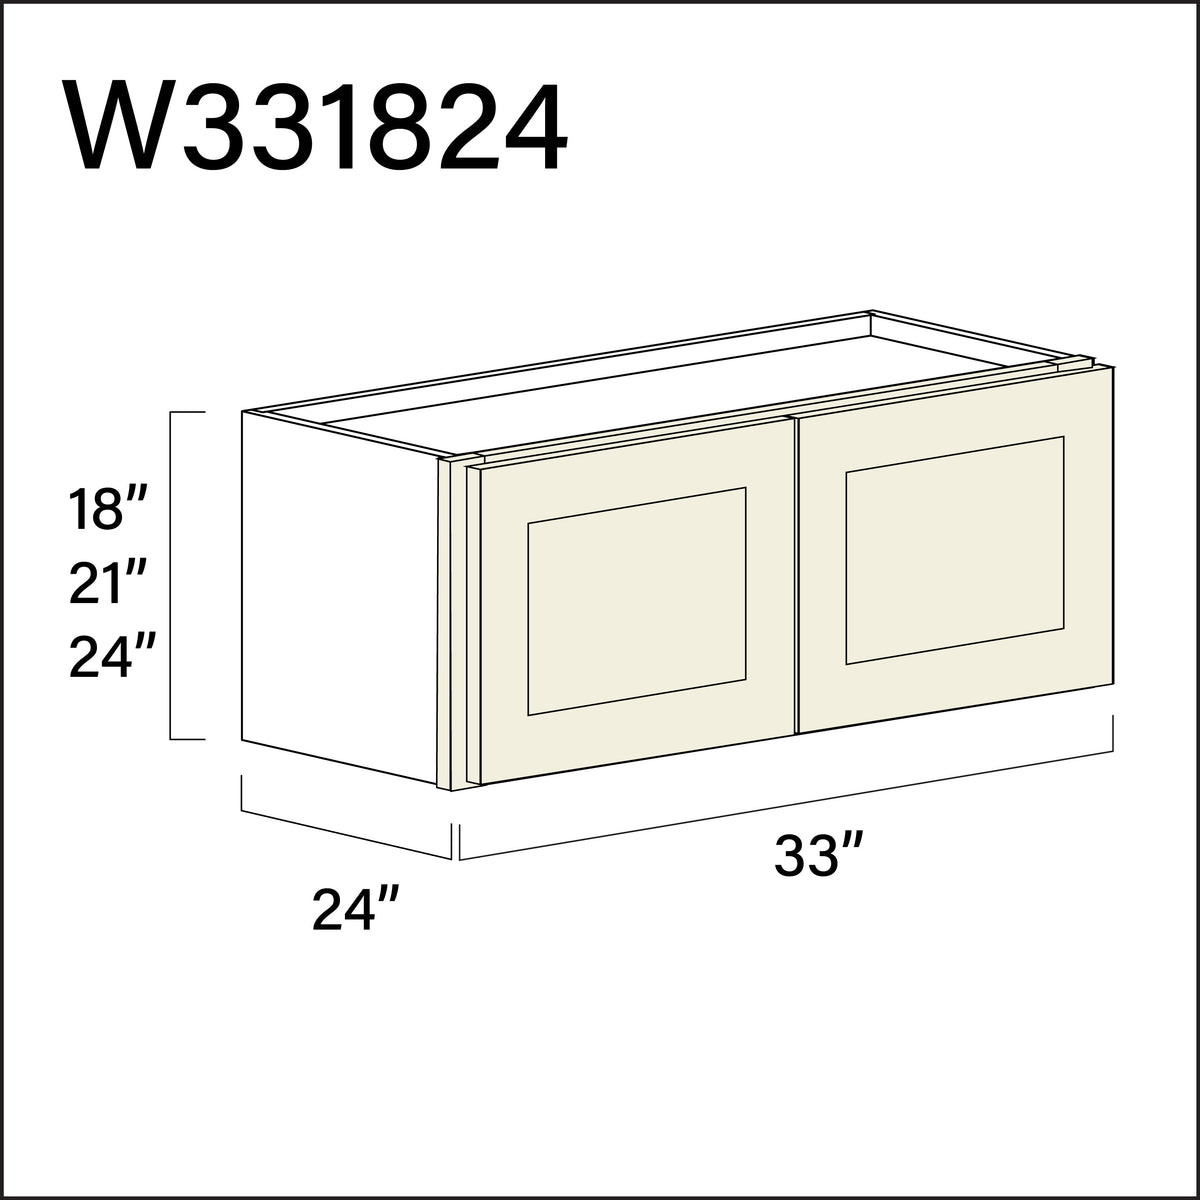 Alton Ivory White Wall Bridge Double Door Cabinet - 33" W x 18" H x 24" D